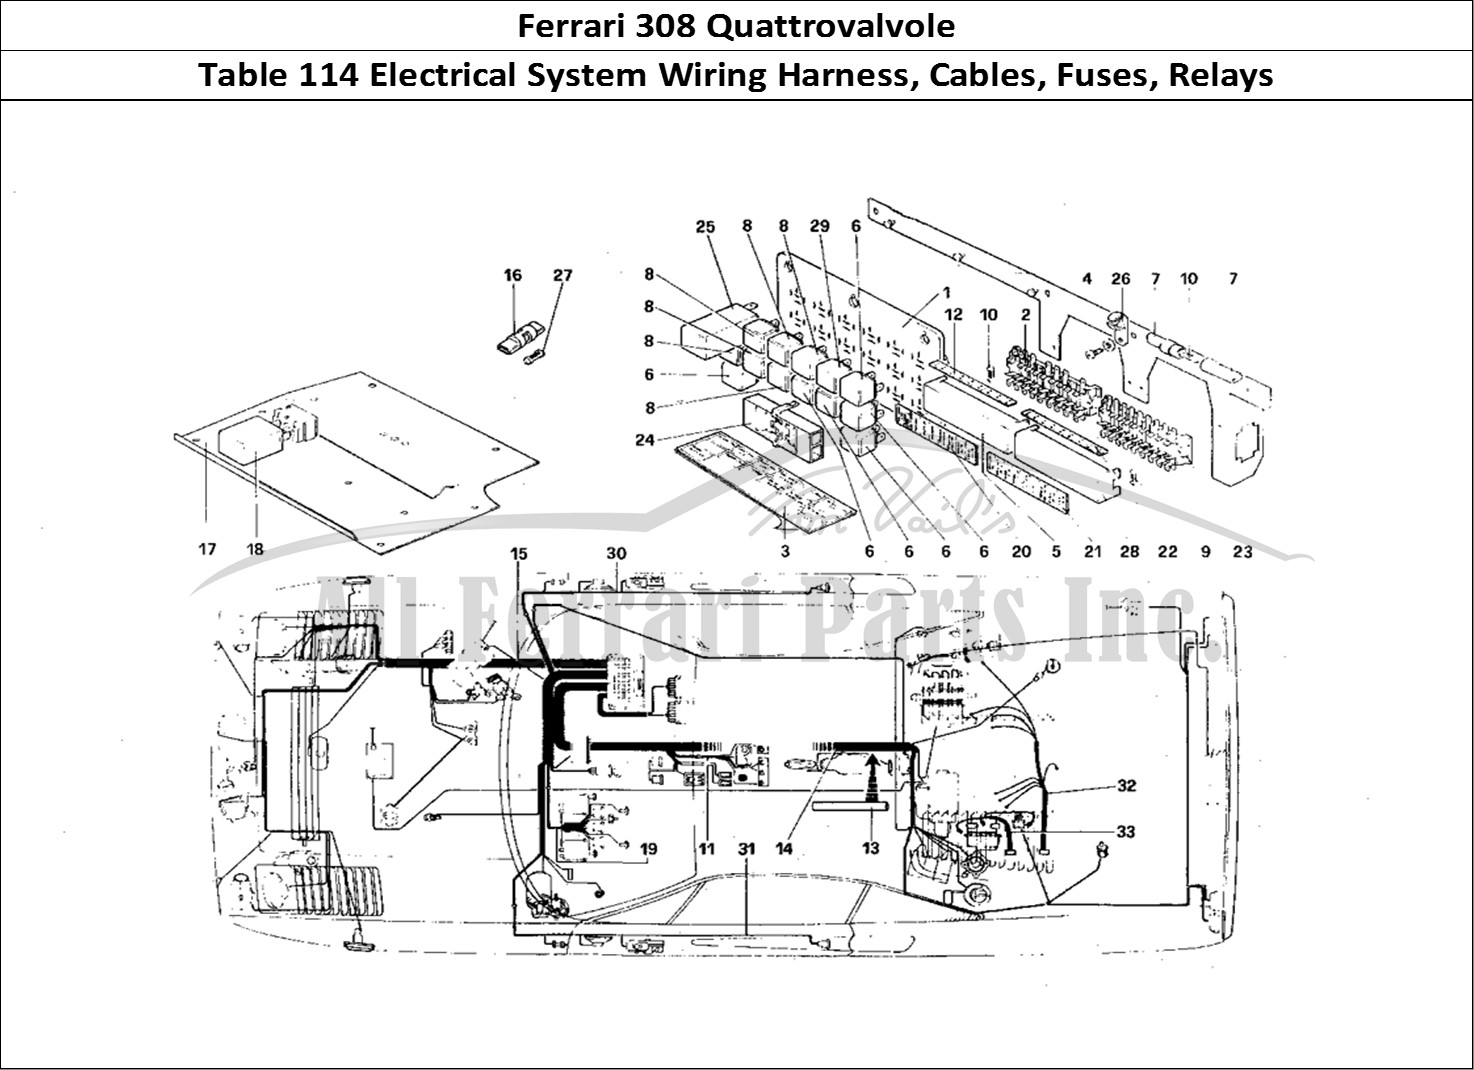 Ferrari Parts Ferrari 308 Quattrovalvole (1985) Page 114 Electrical System - Cable